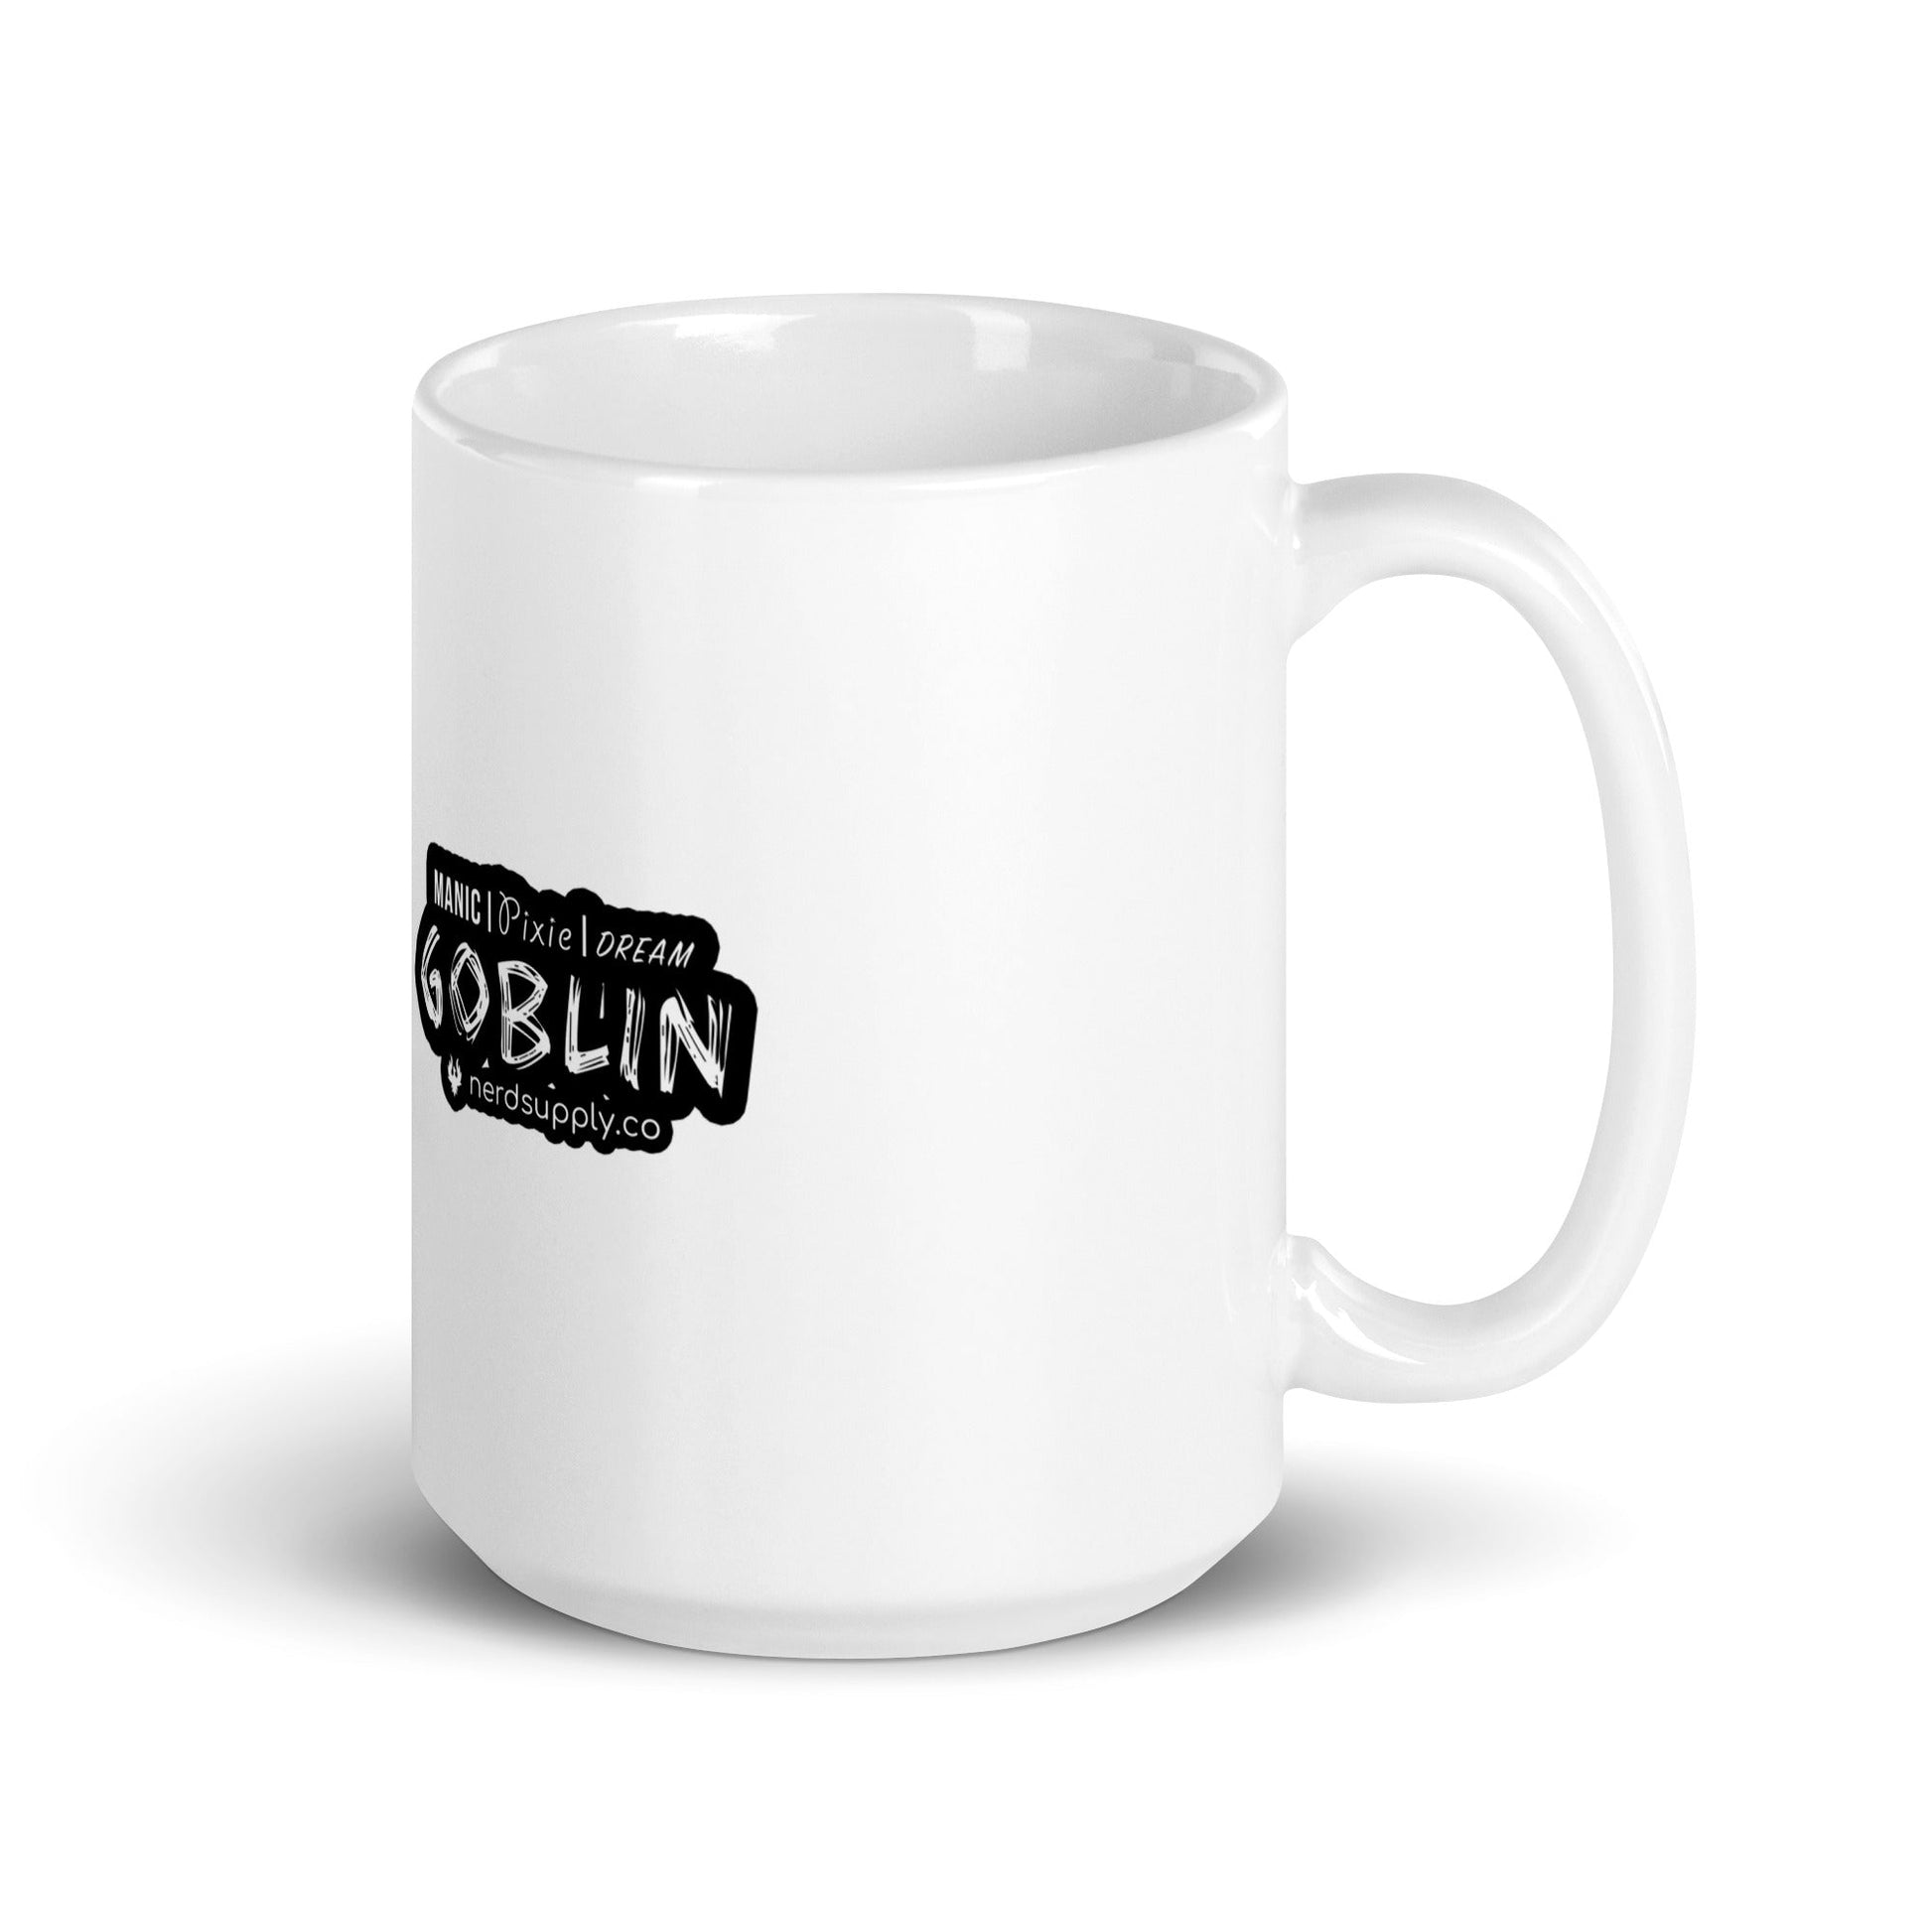 Manic Pixie Dream Goblin White Mug - The Nerd Supply Company